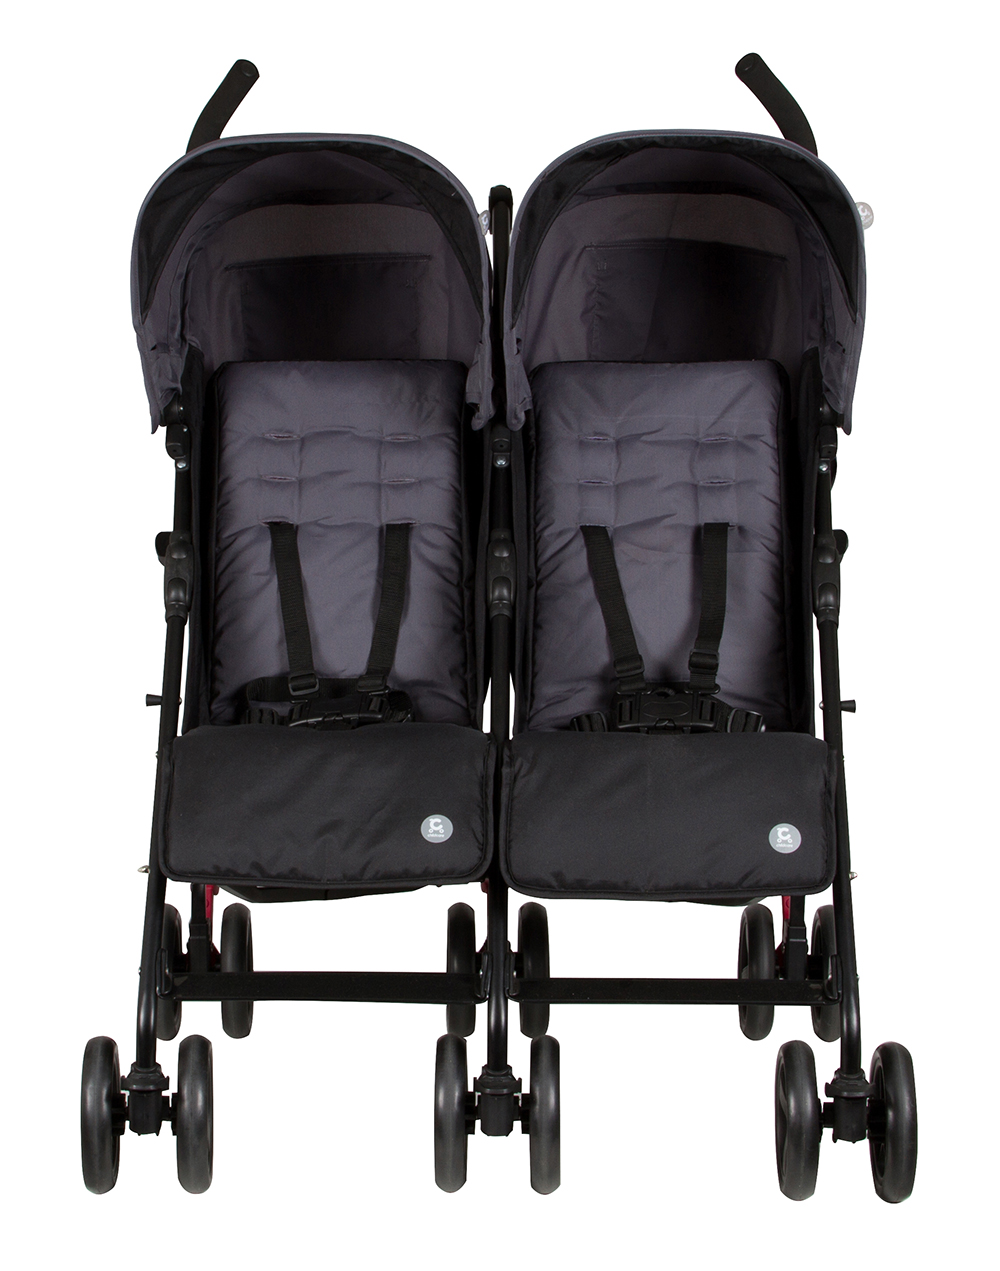 childcare nix twin stroller